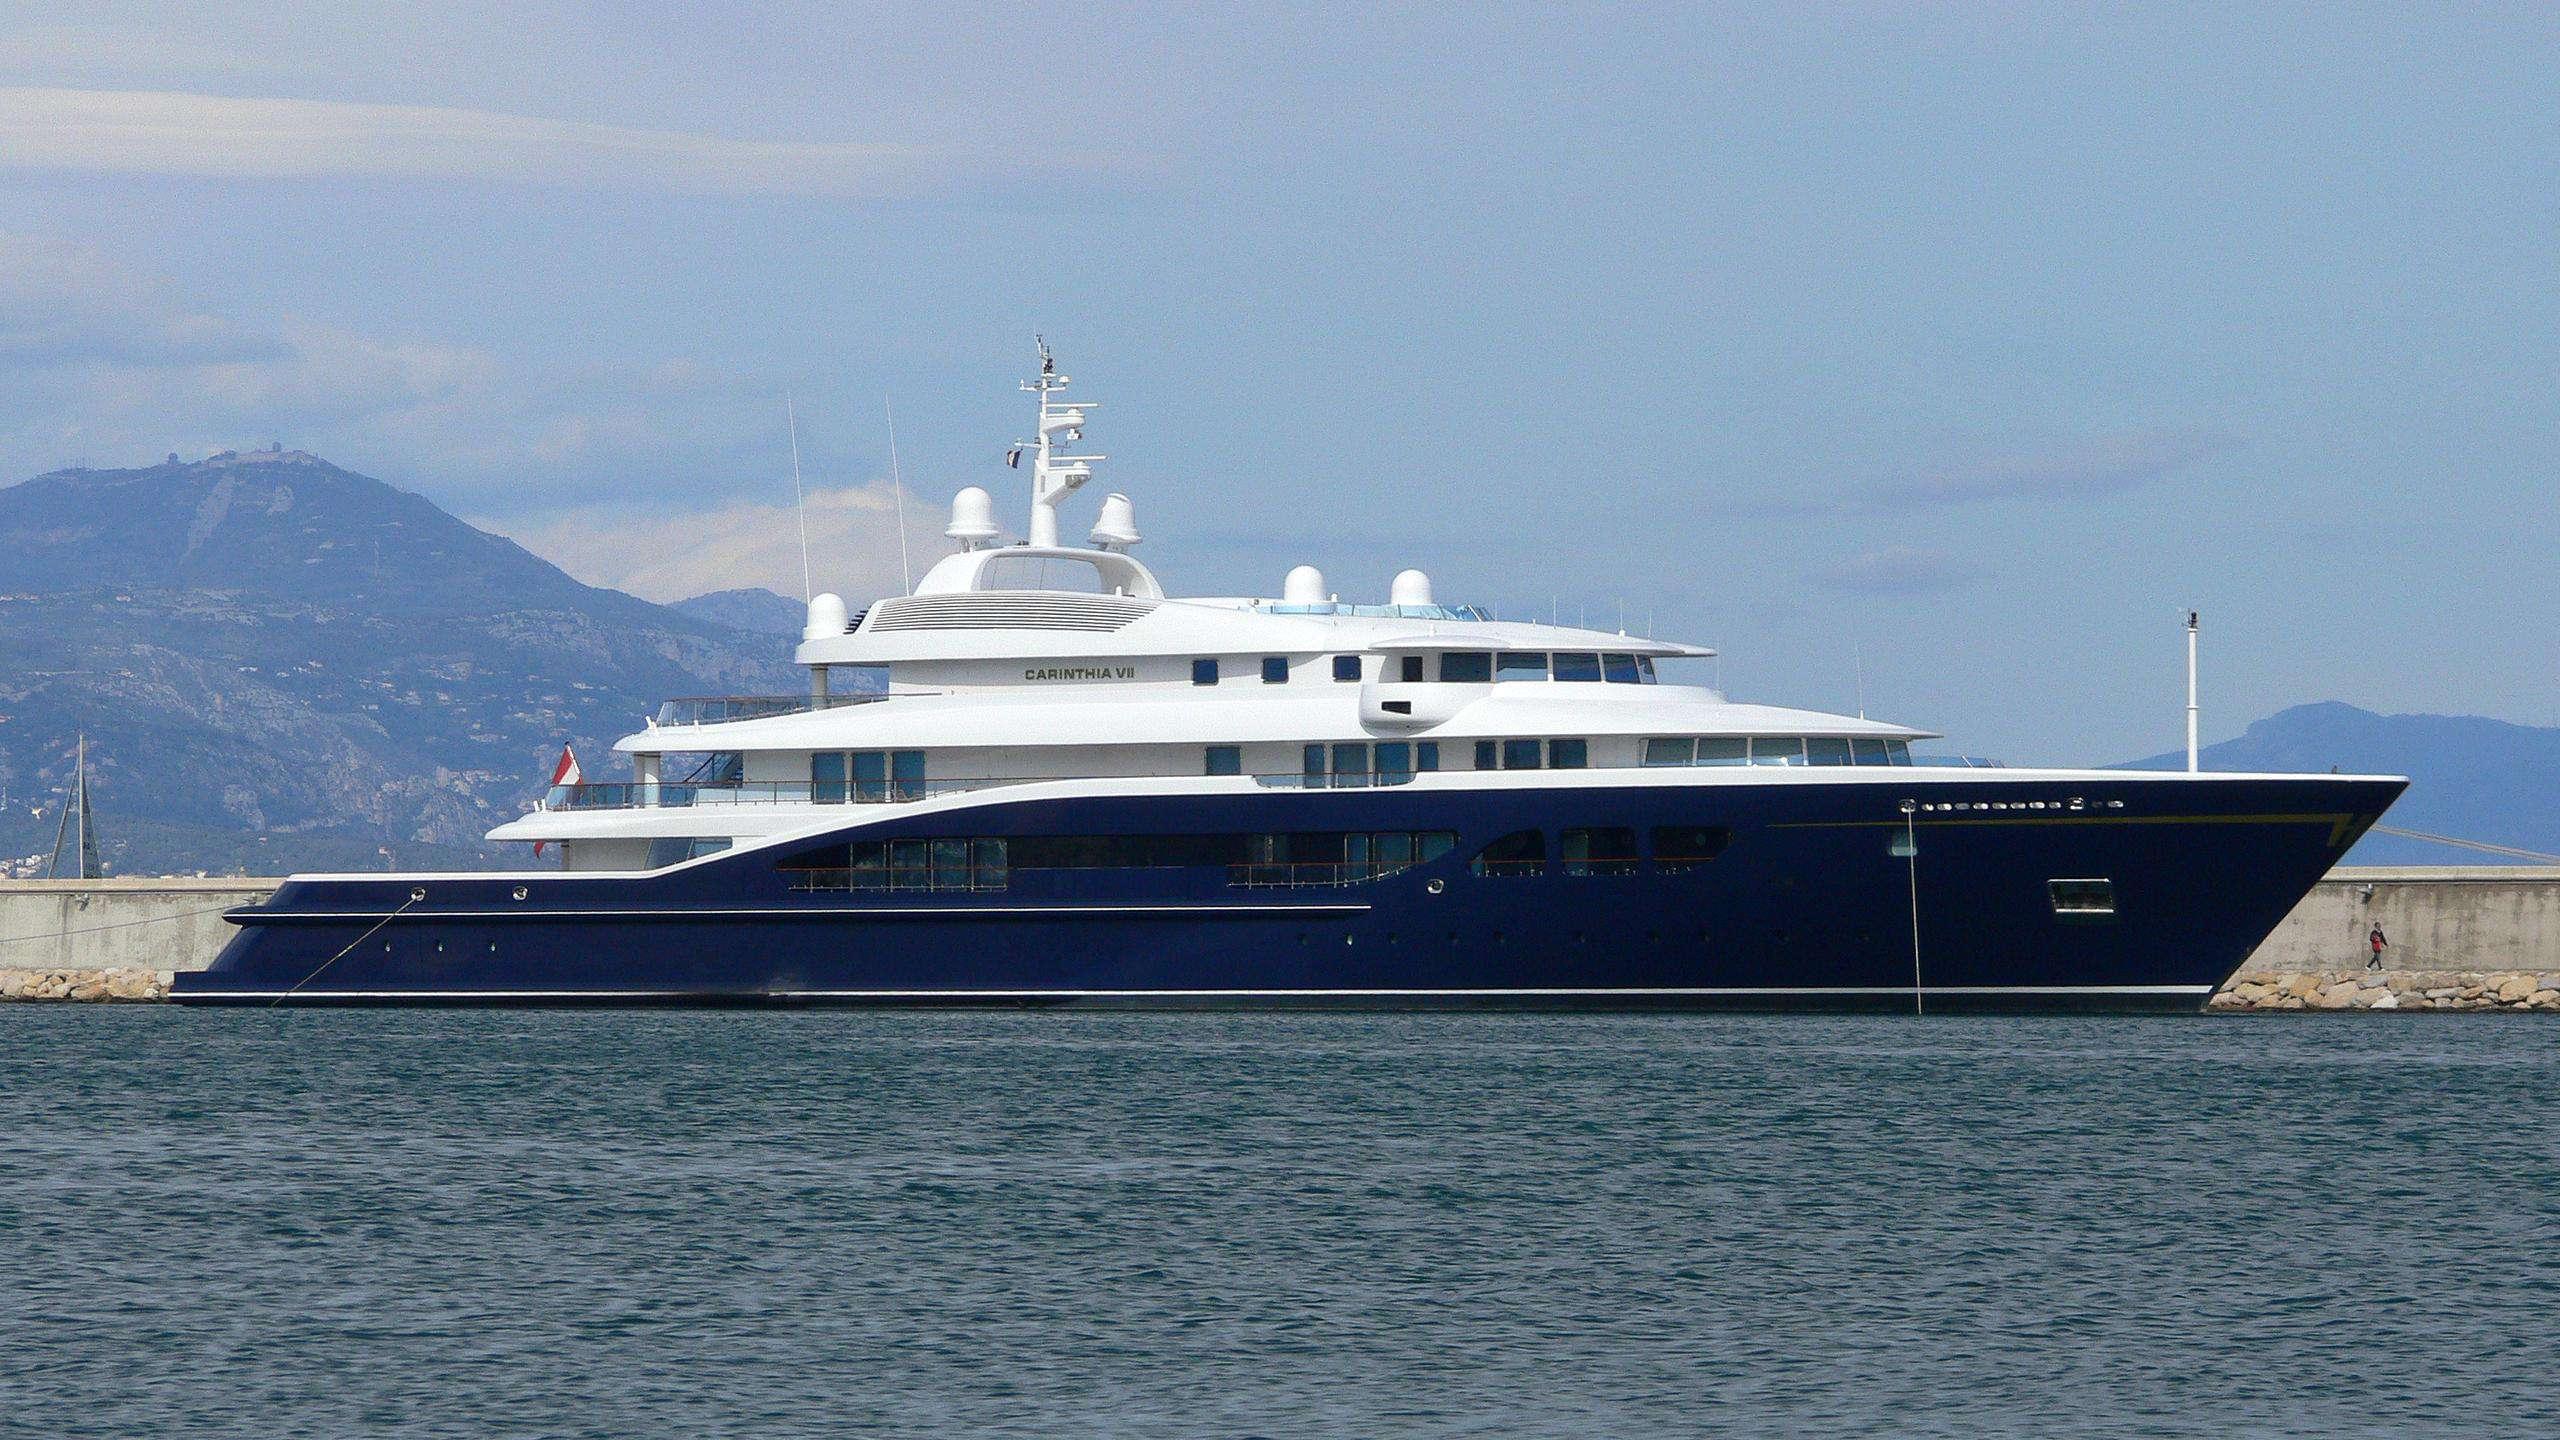 carinthia yacht sold